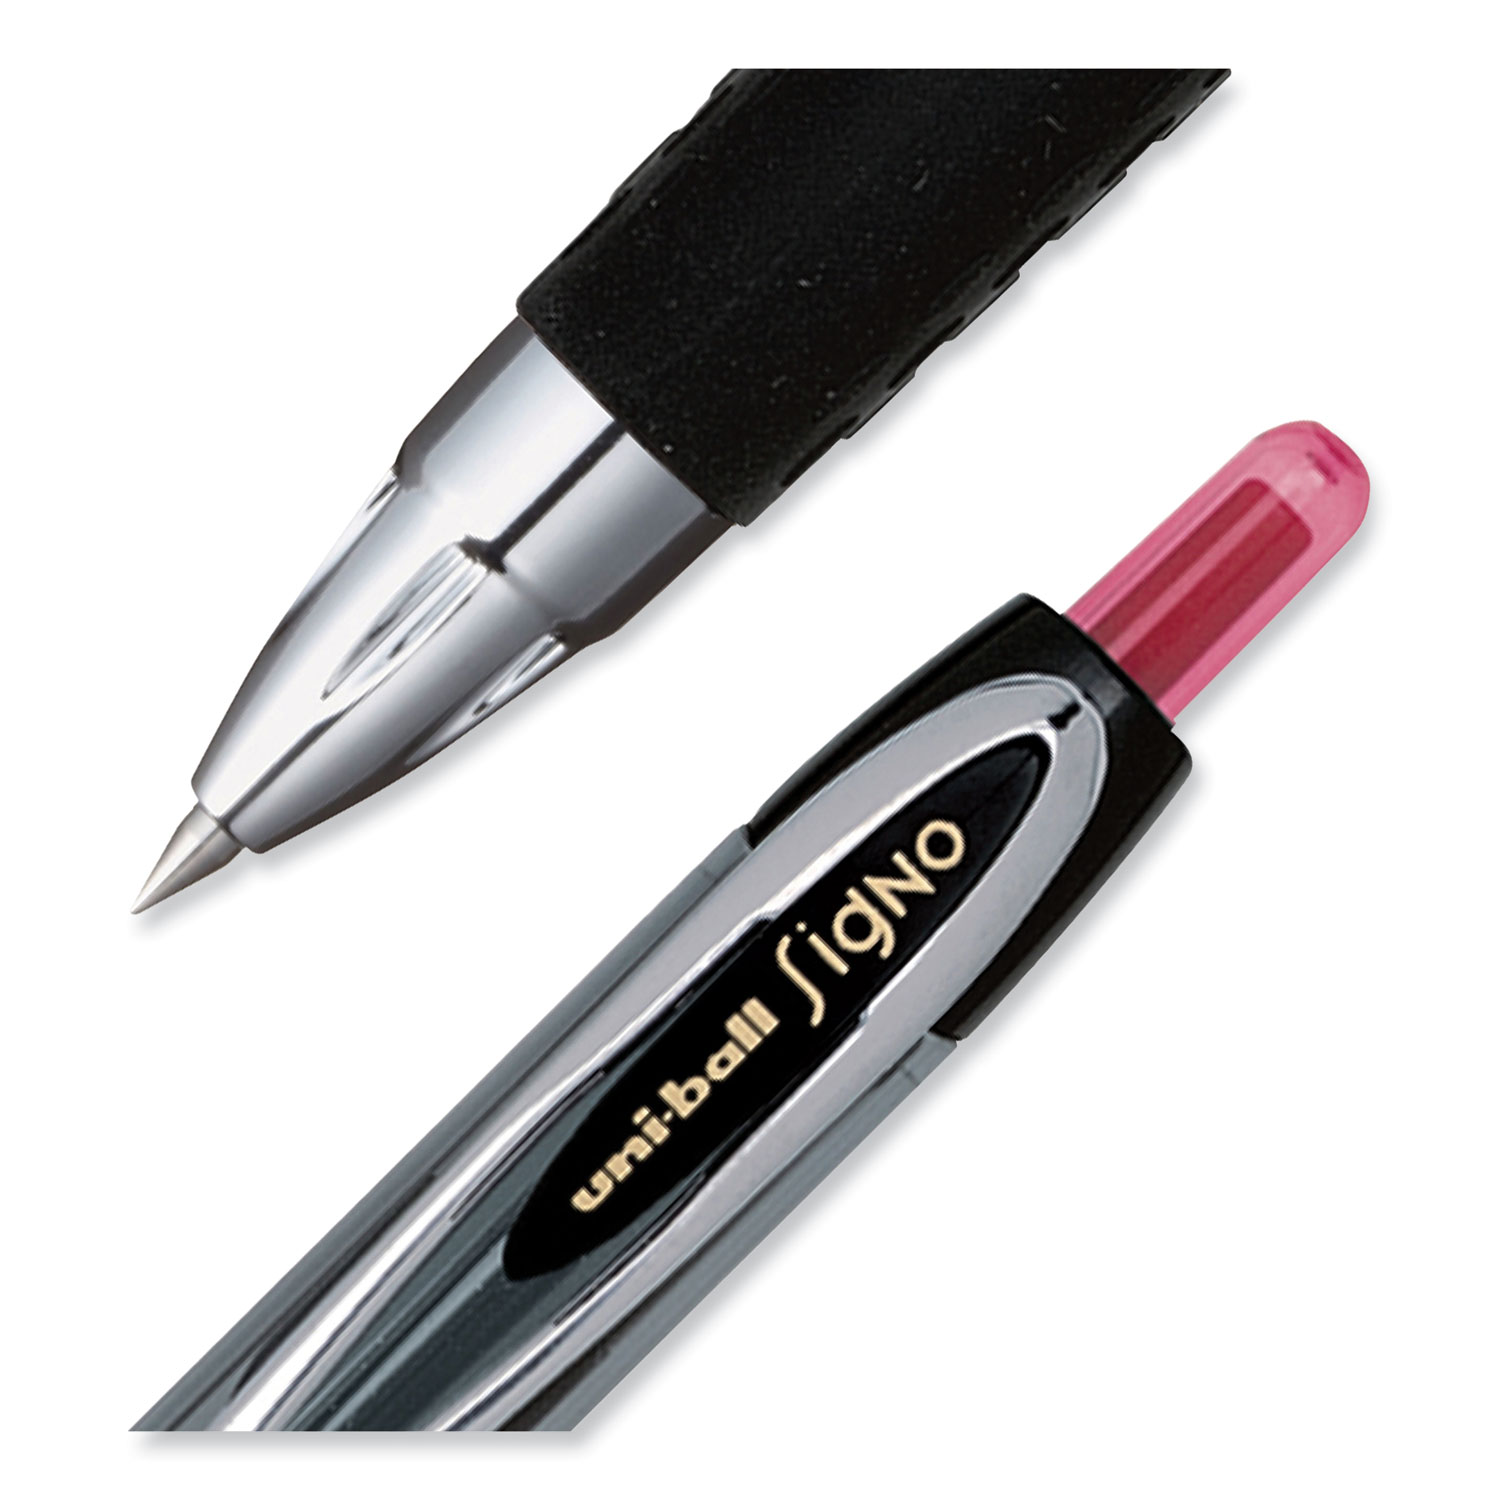 uniball Signo 207 Gel Pen, Retractable, Medium 0.7 mm, Blue Ink,  Smoke/Black/Blue Barrel, 4/Pack